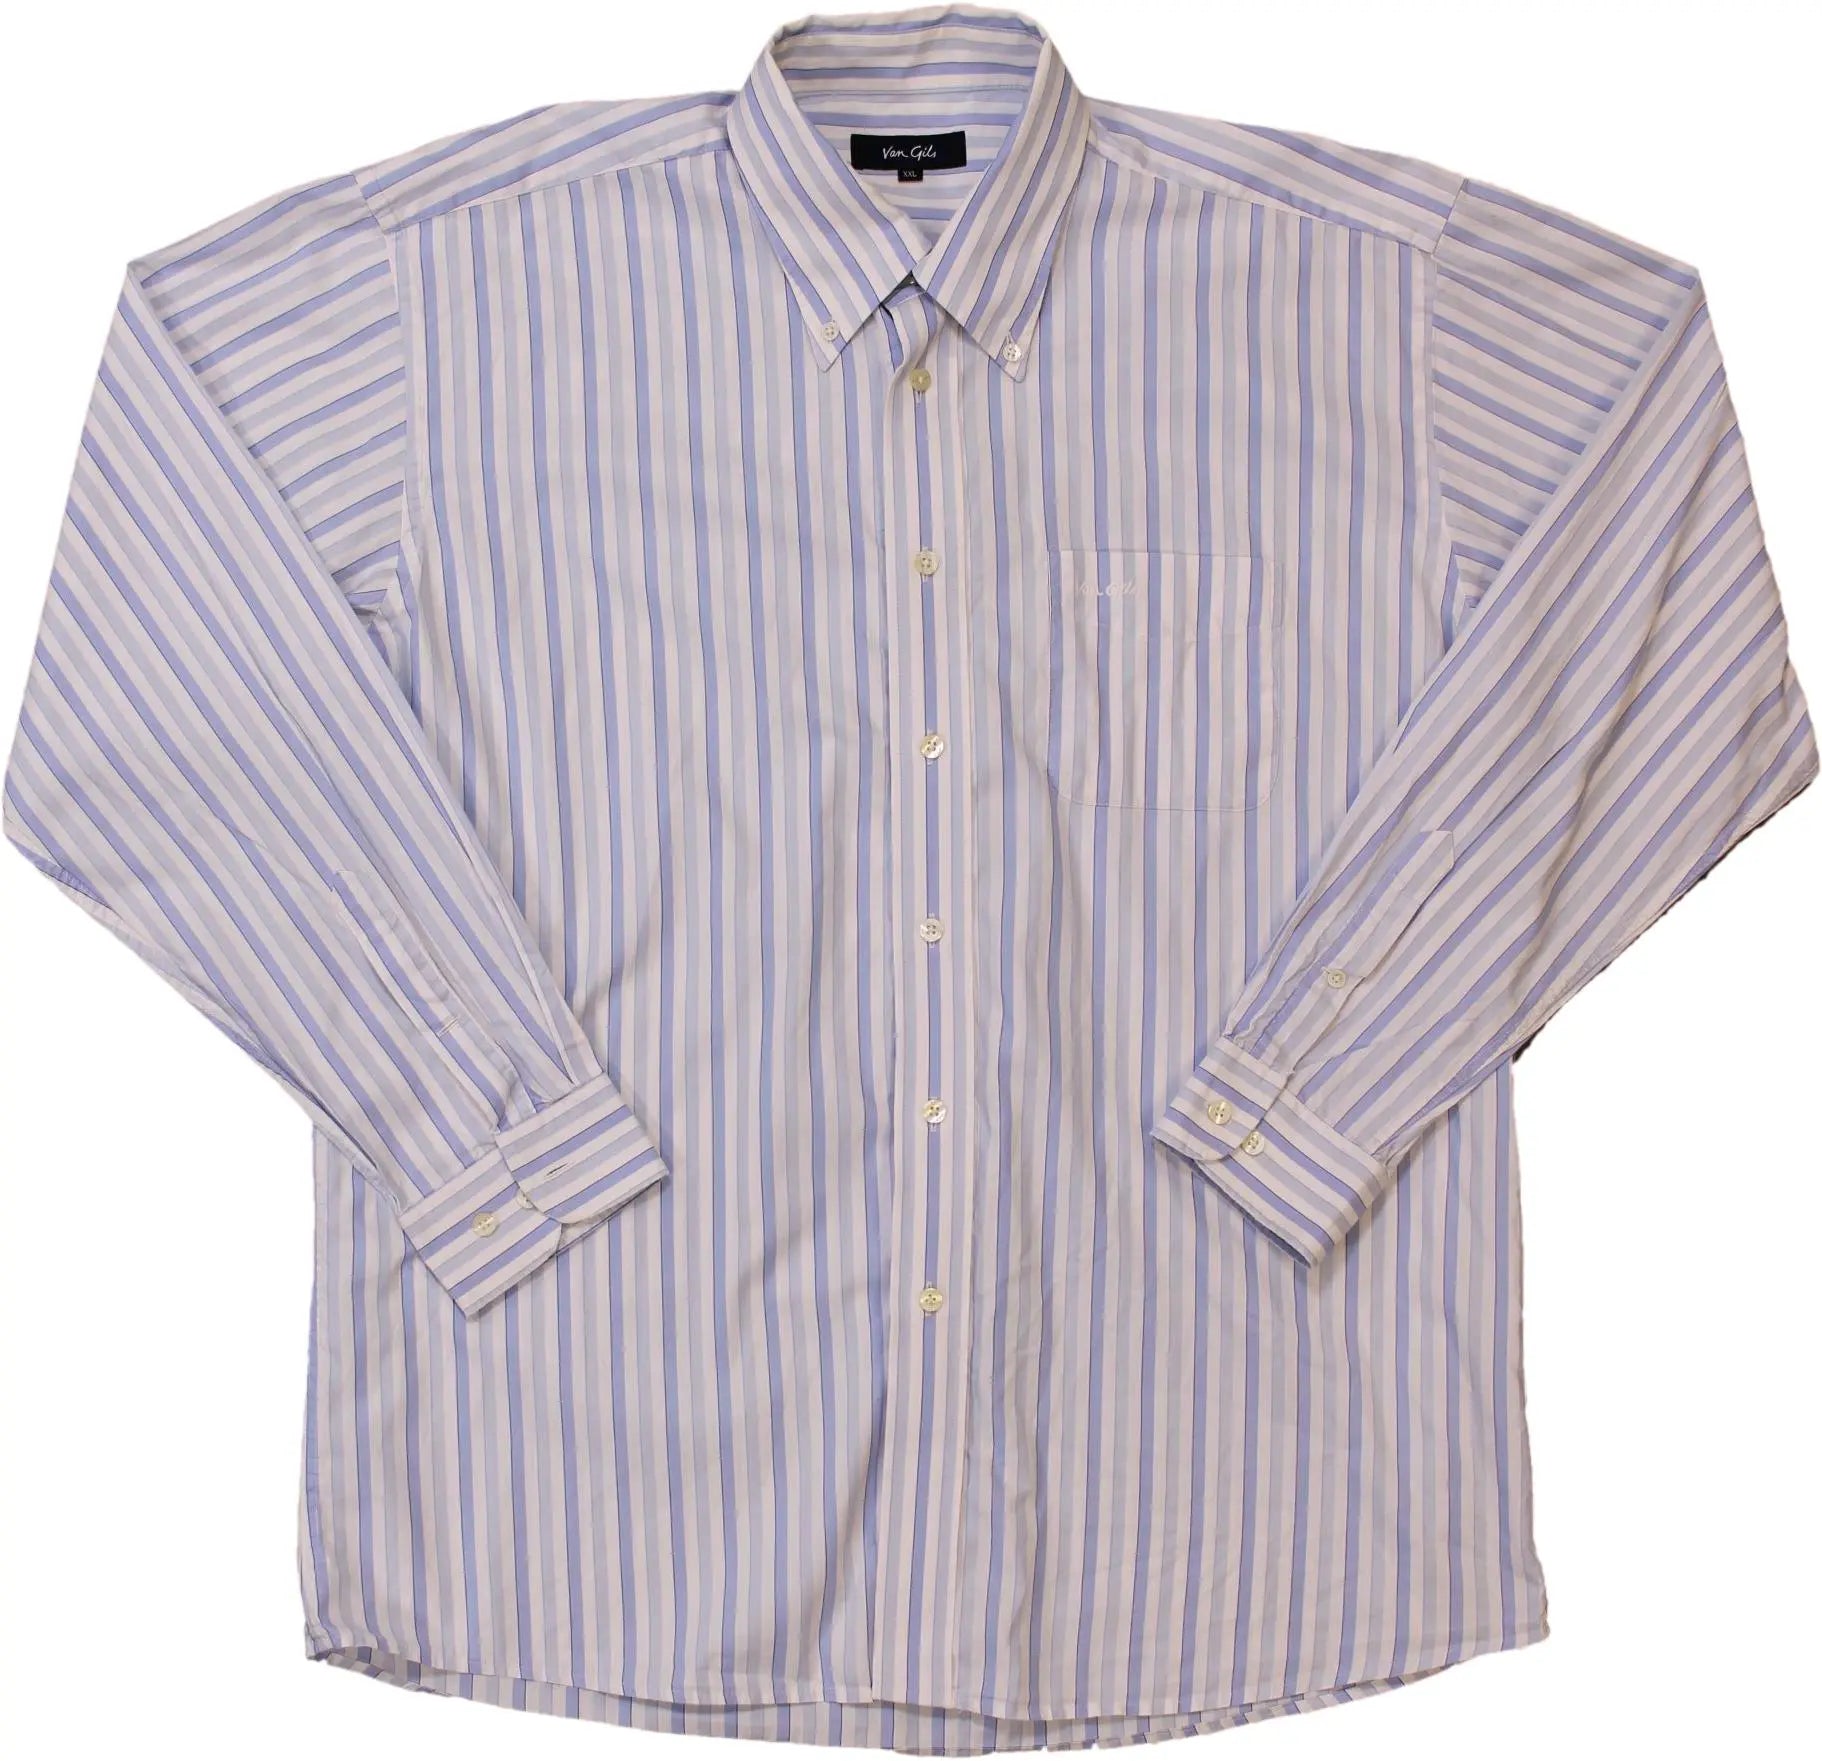 Van Gils - BLUE1714- ThriftTale.com - Vintage and second handclothing